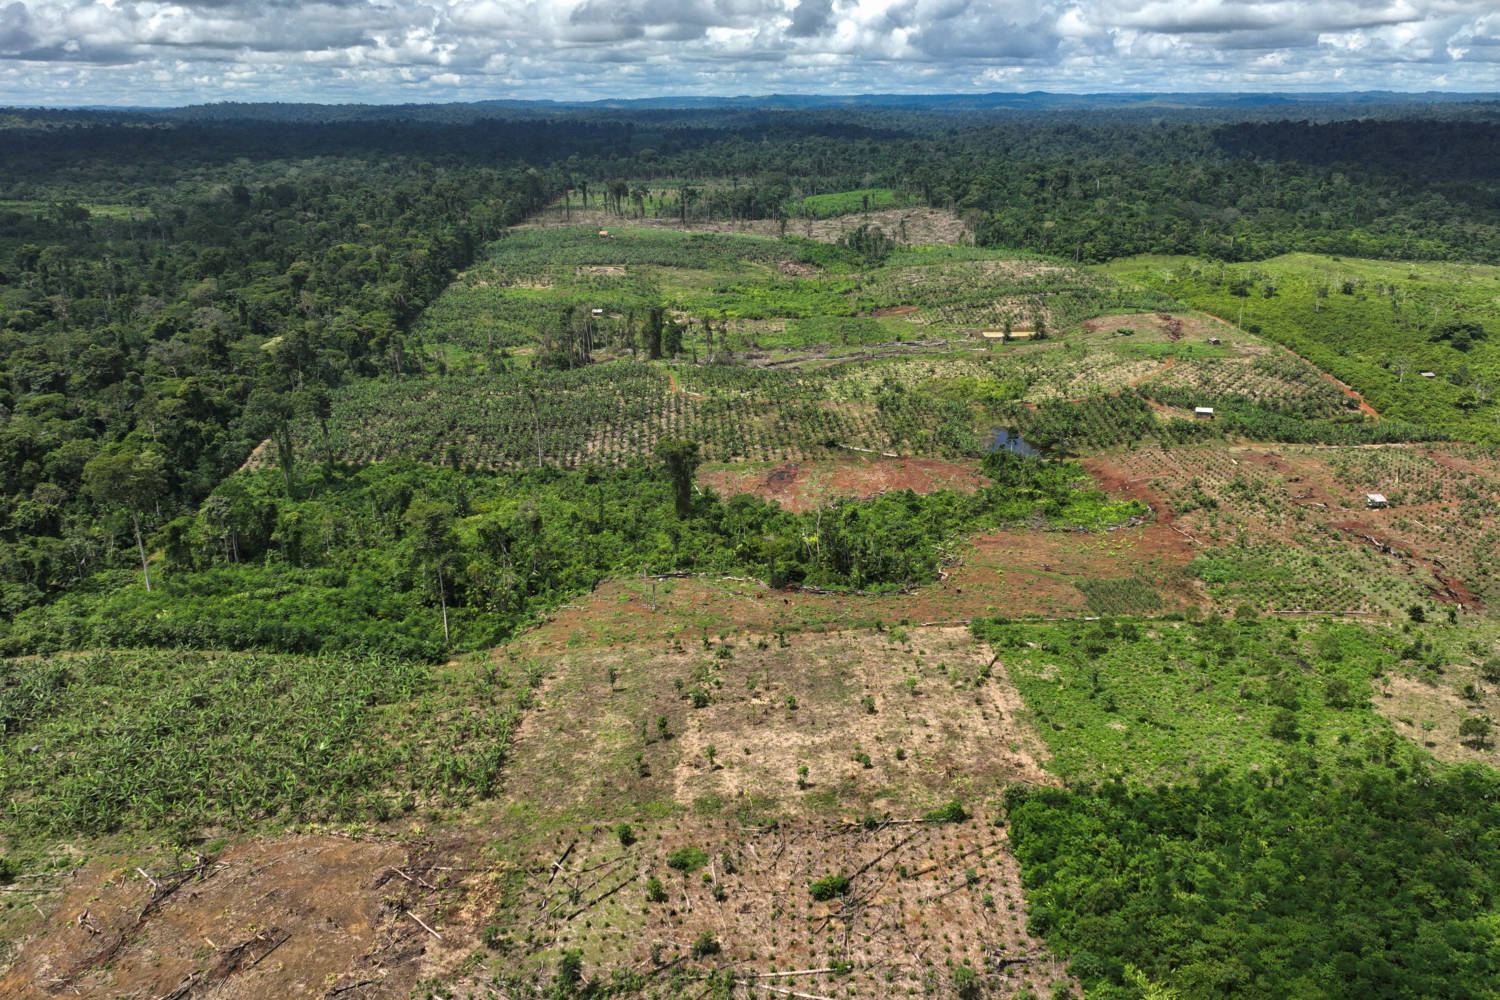 File Photo: Drone Footage Shows Deforestation In Brazilian Amazon